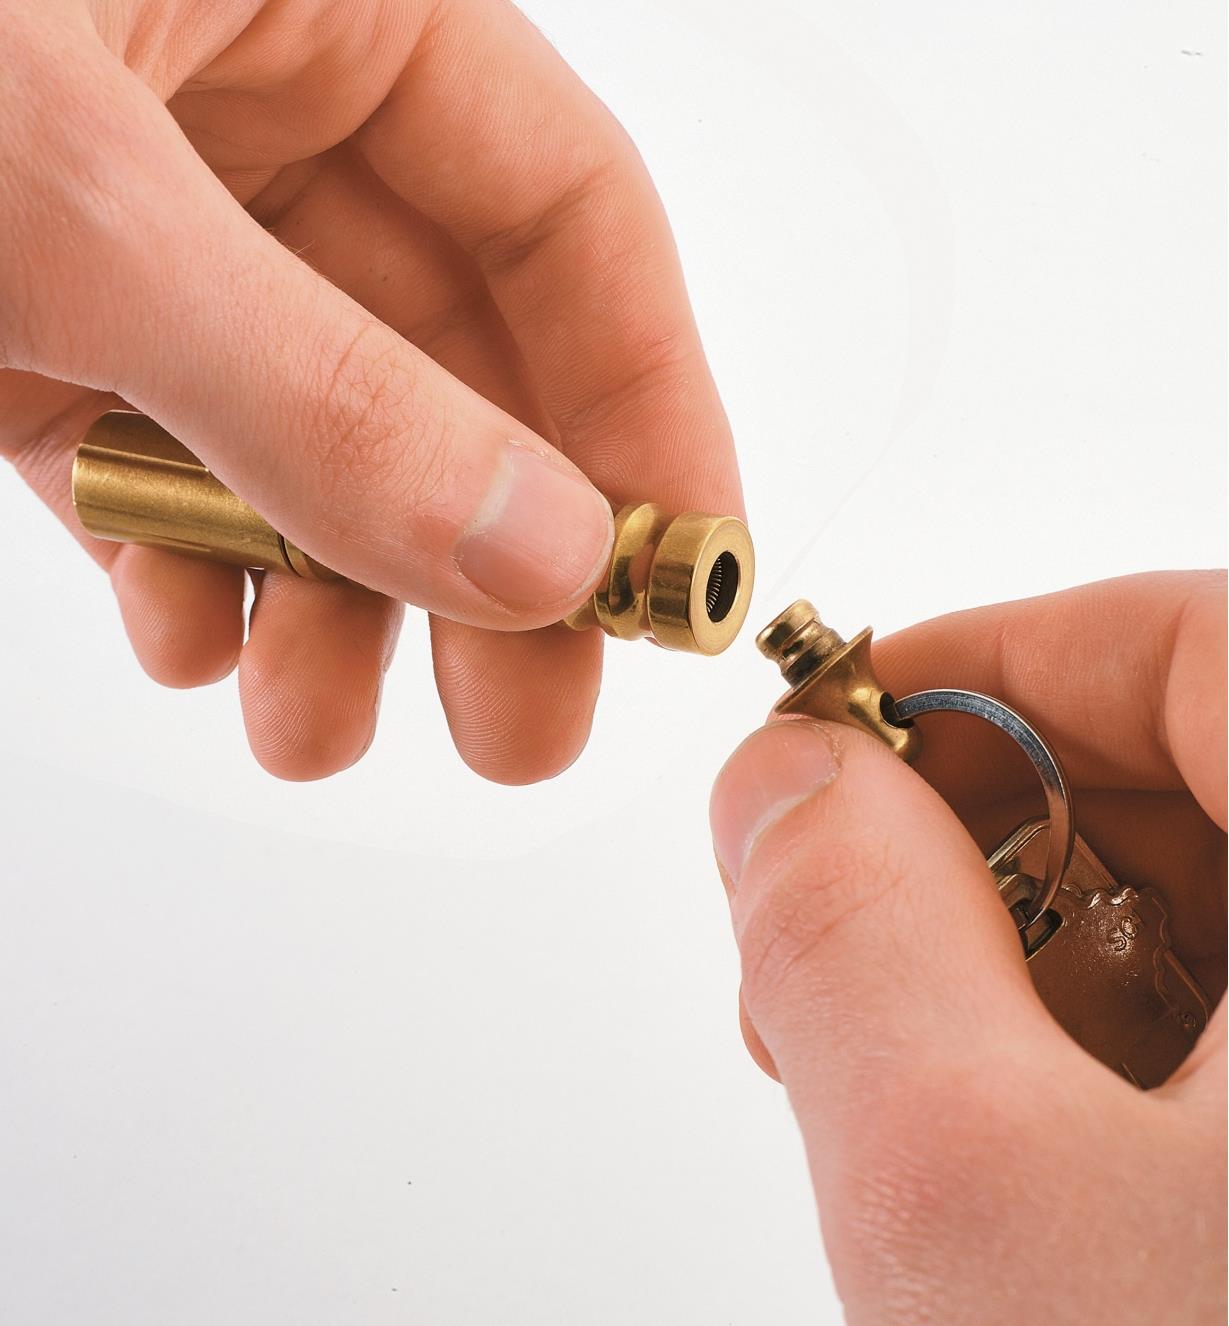 Detaching the brass flashlight from the key ring